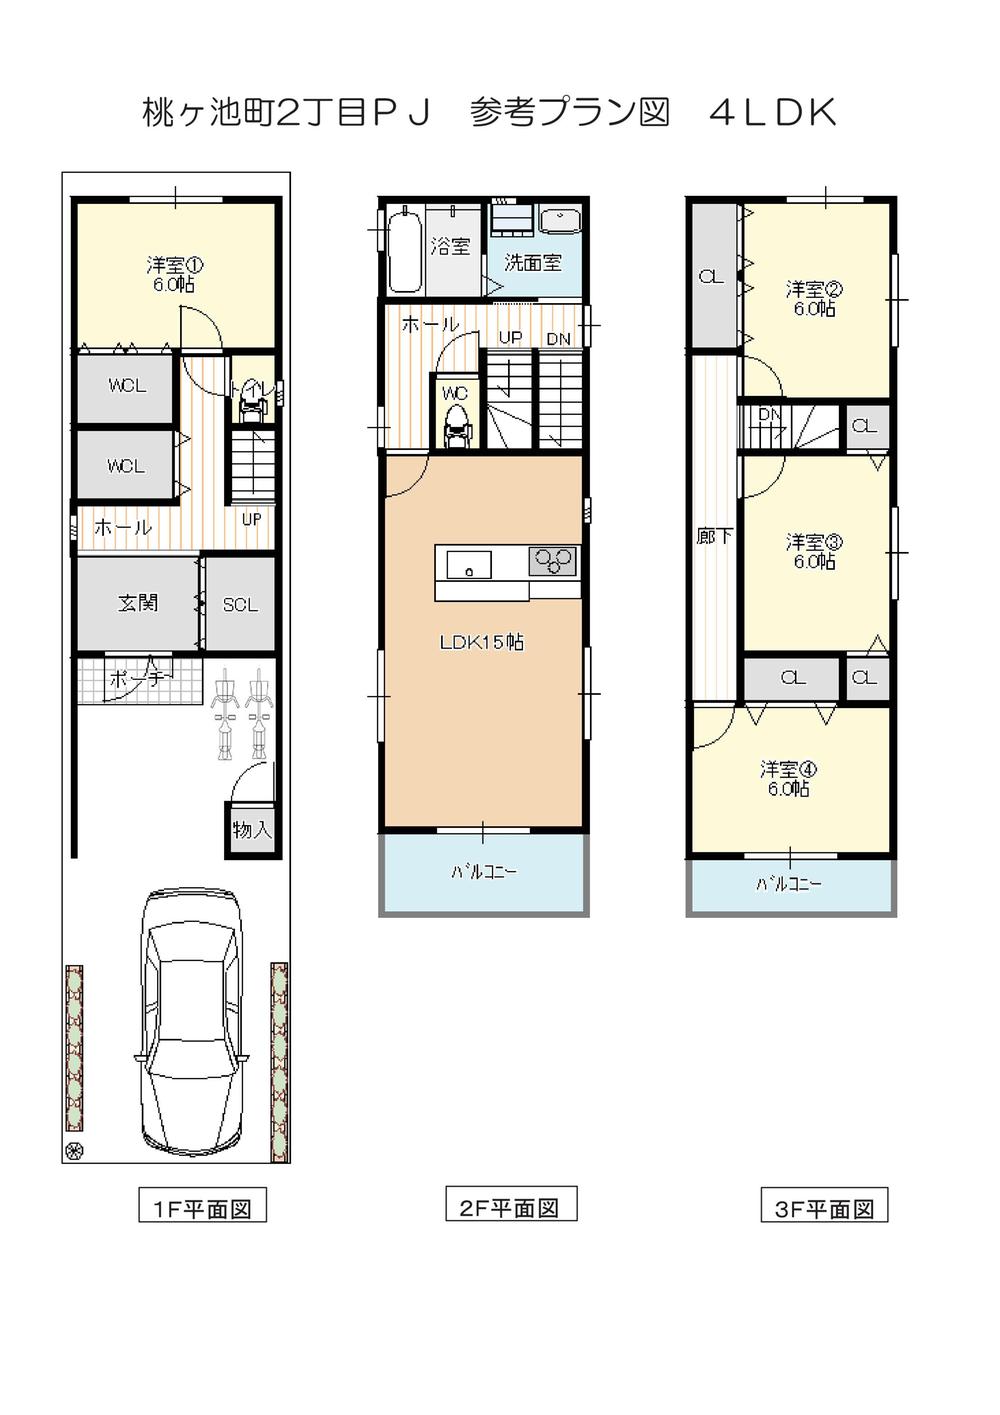 Floor plan. 37,800,000 yen, 4LDK, Land area 71.47 sq m , Building area 100.39 sq m